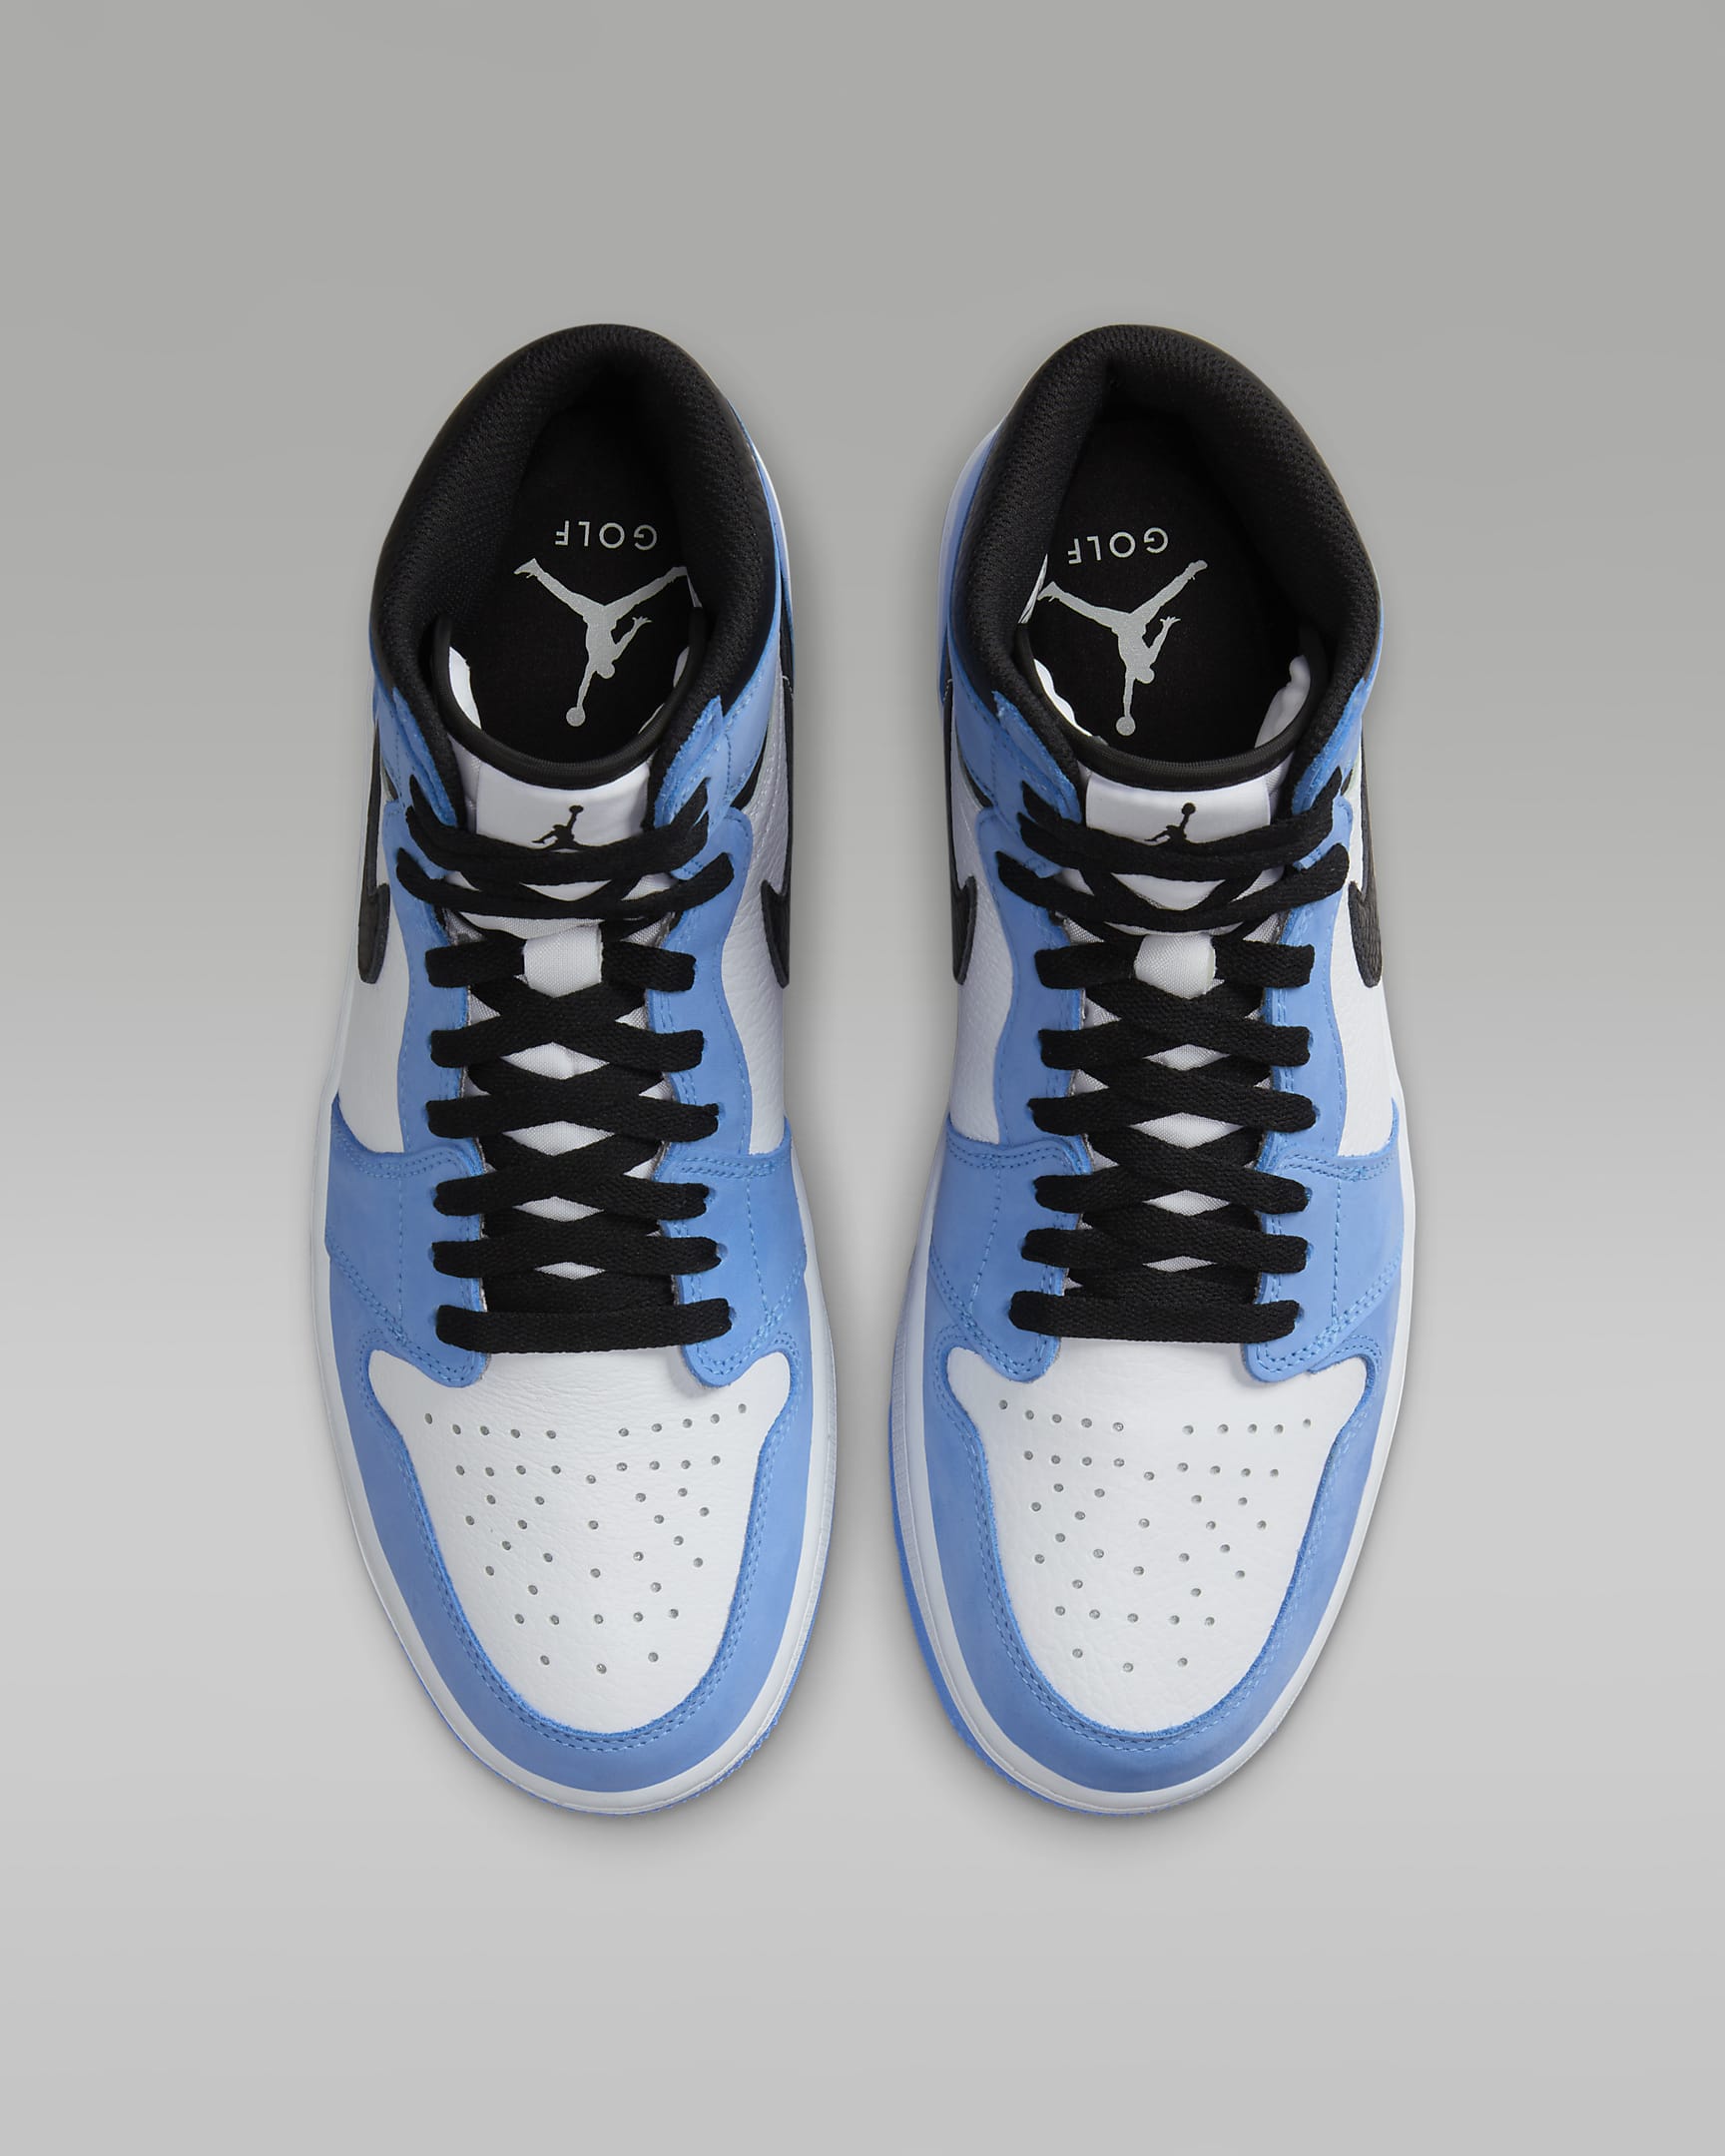 Air Jordan I High G Men's Golf Shoes - University Blue/White/Black